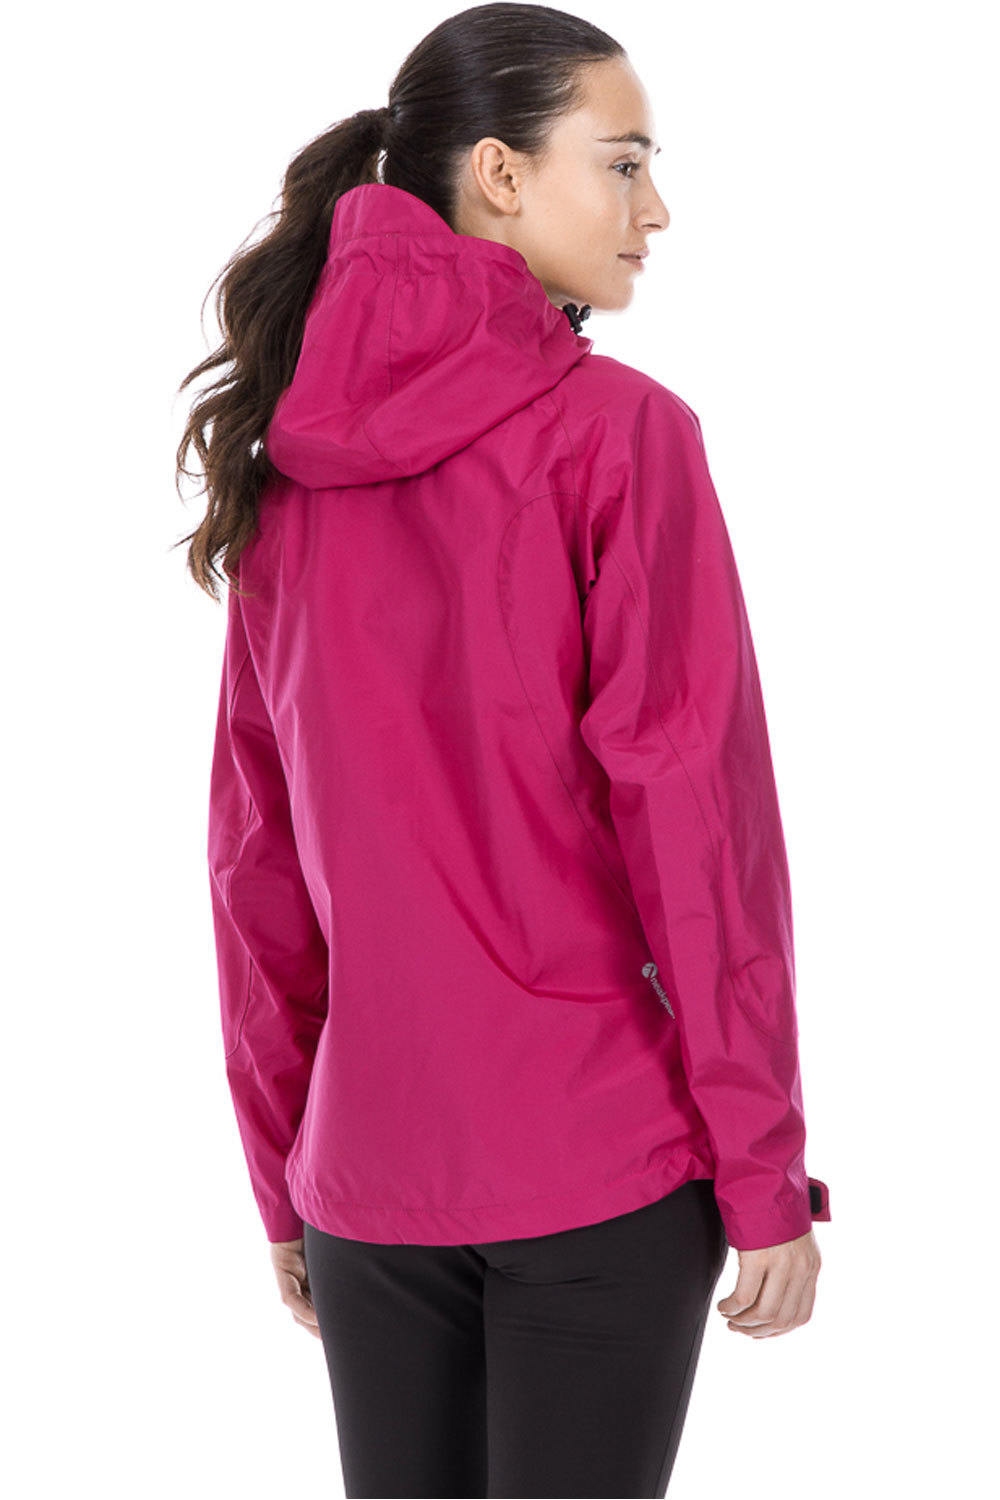 Neak Peak chaqueta impermeable mujer 3 LAYER WOMAN CERISE/BRIGHT Rose vista trasera